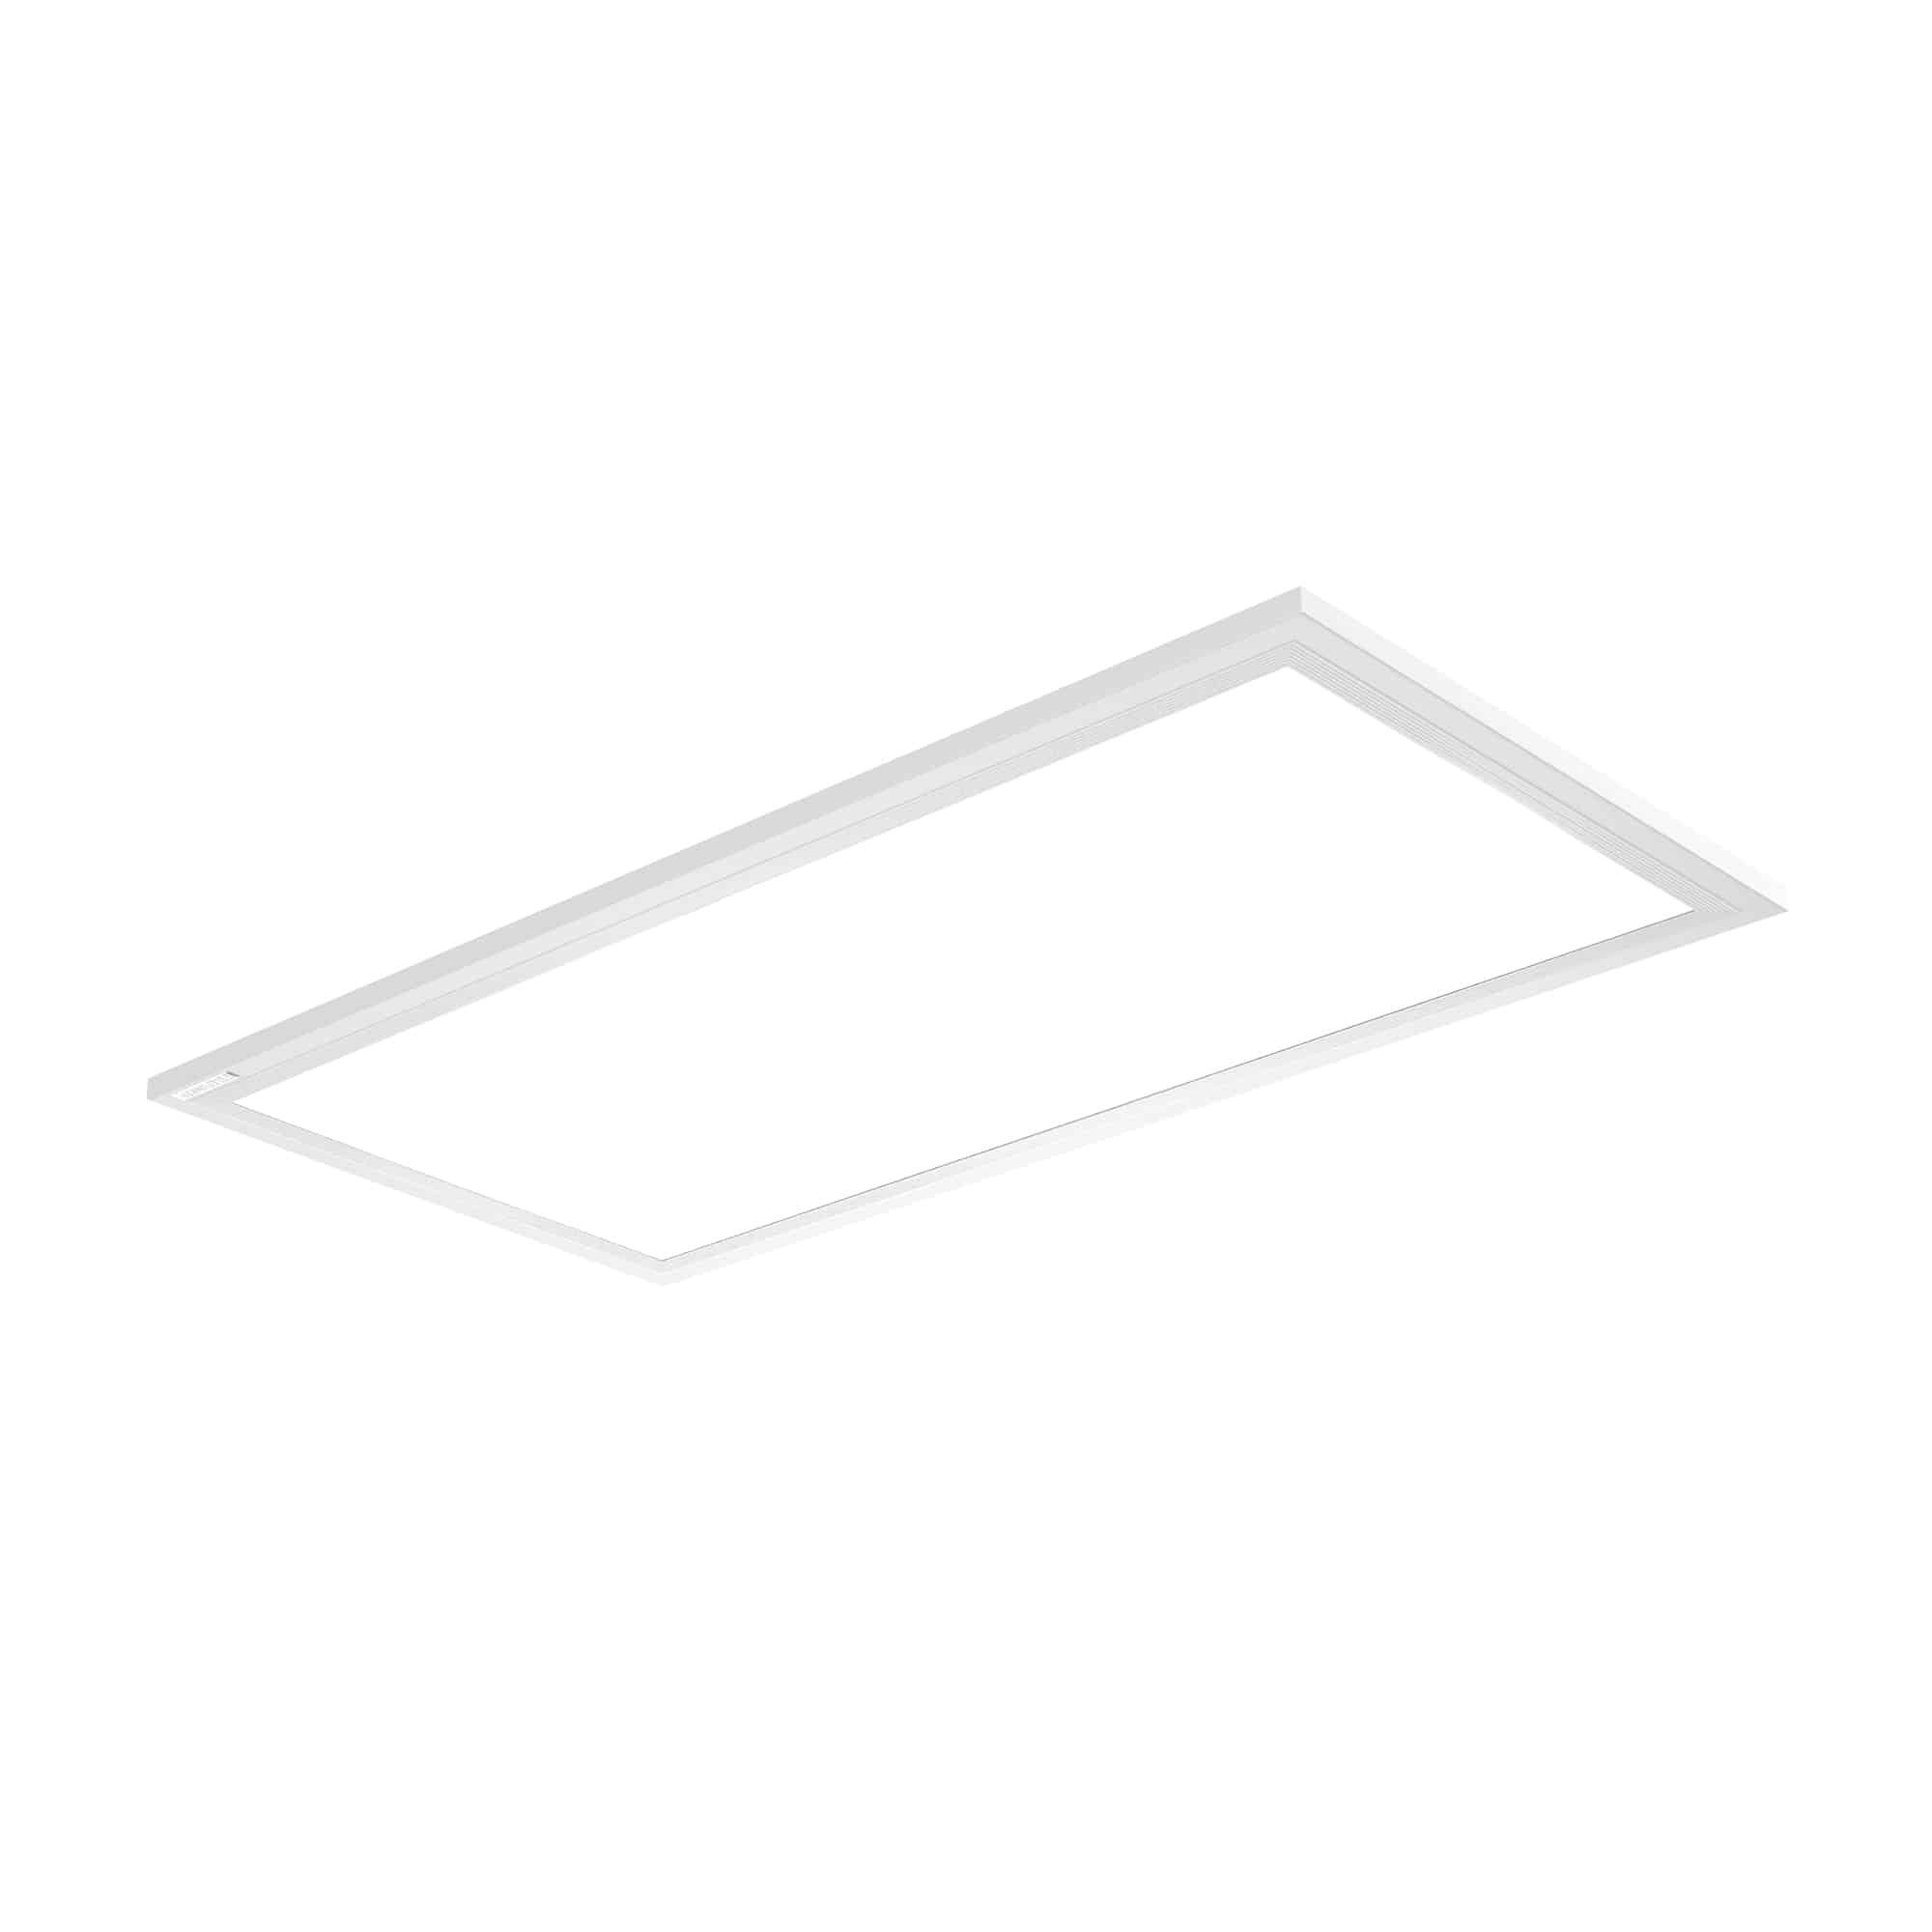 TELEFUNKEN LED Panel 59,5 cm 36W 3900lm weiß